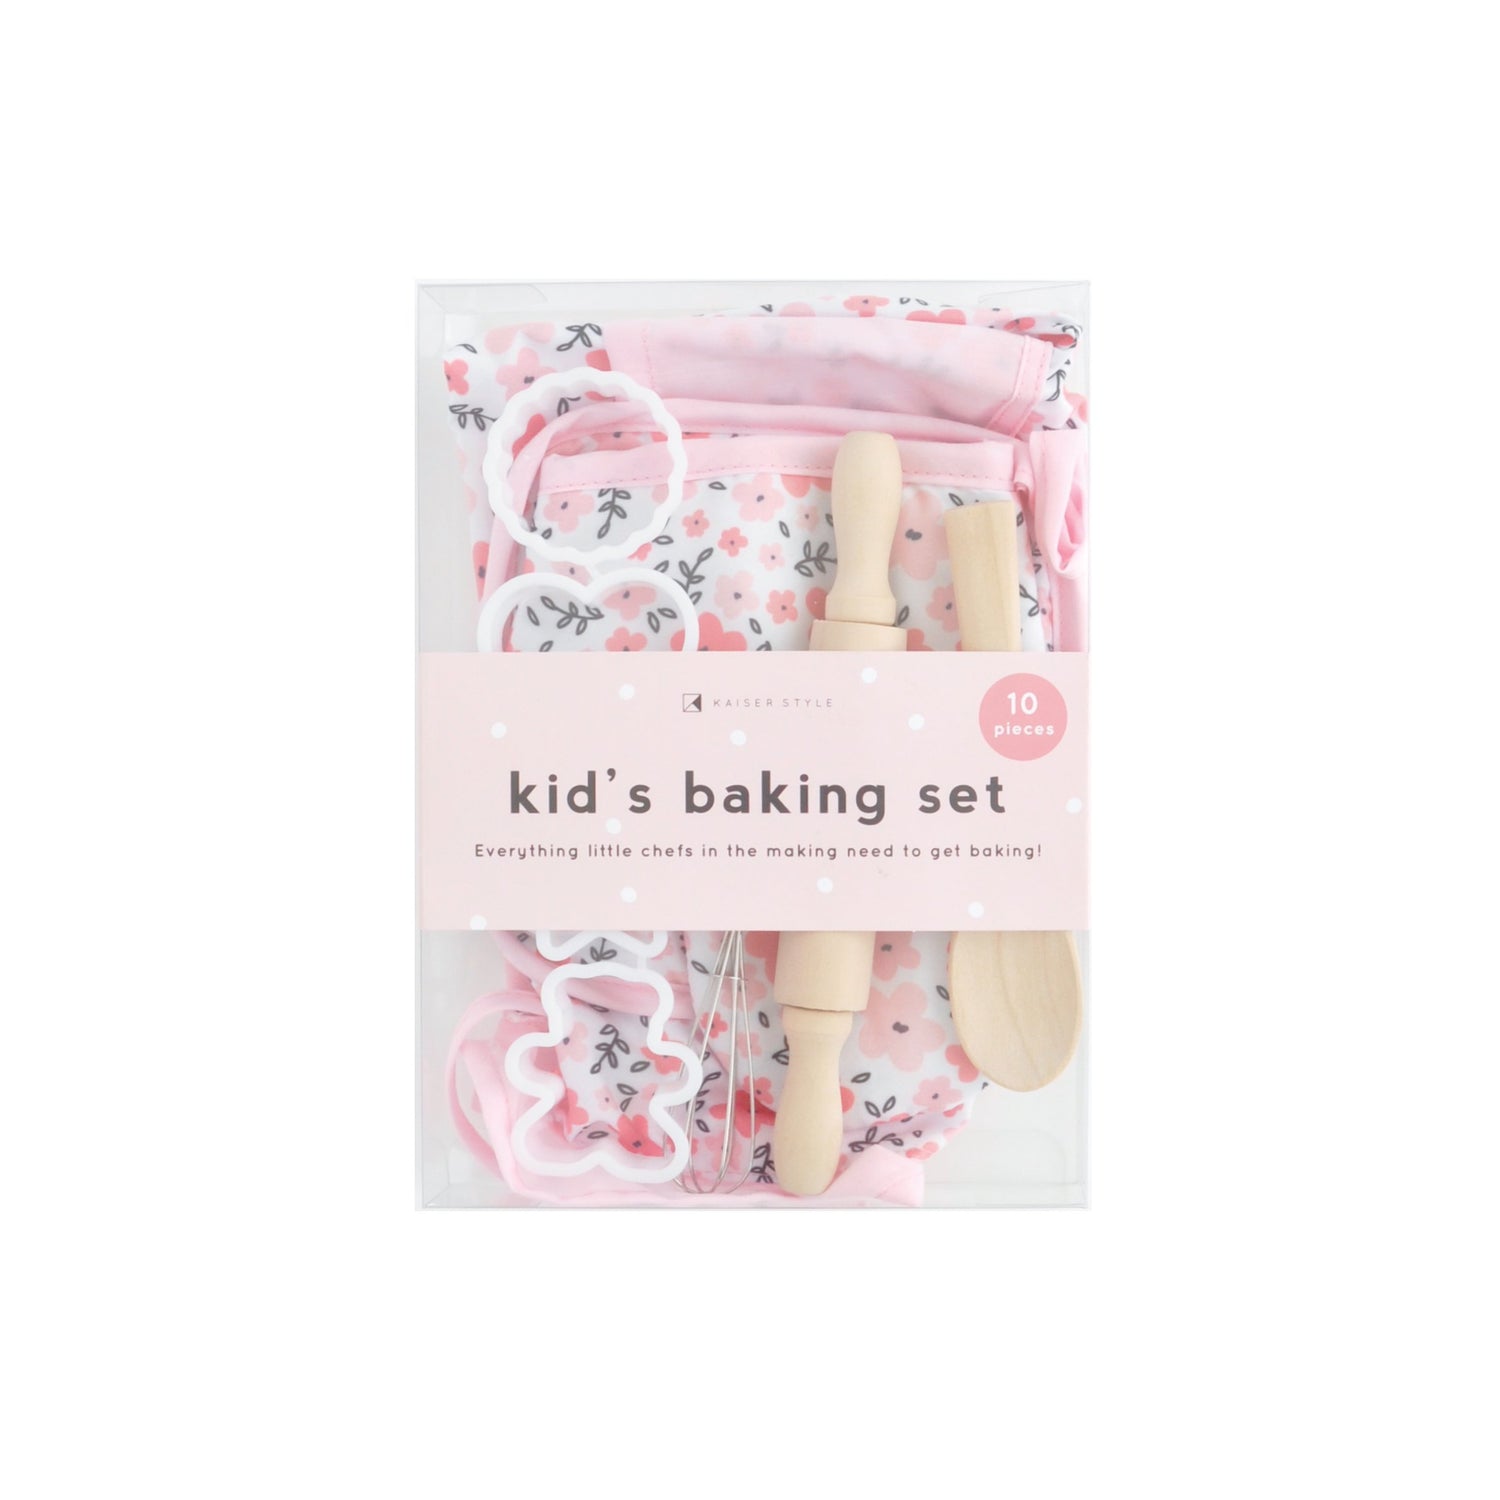 Special Offer - 30% off Kids Baking*